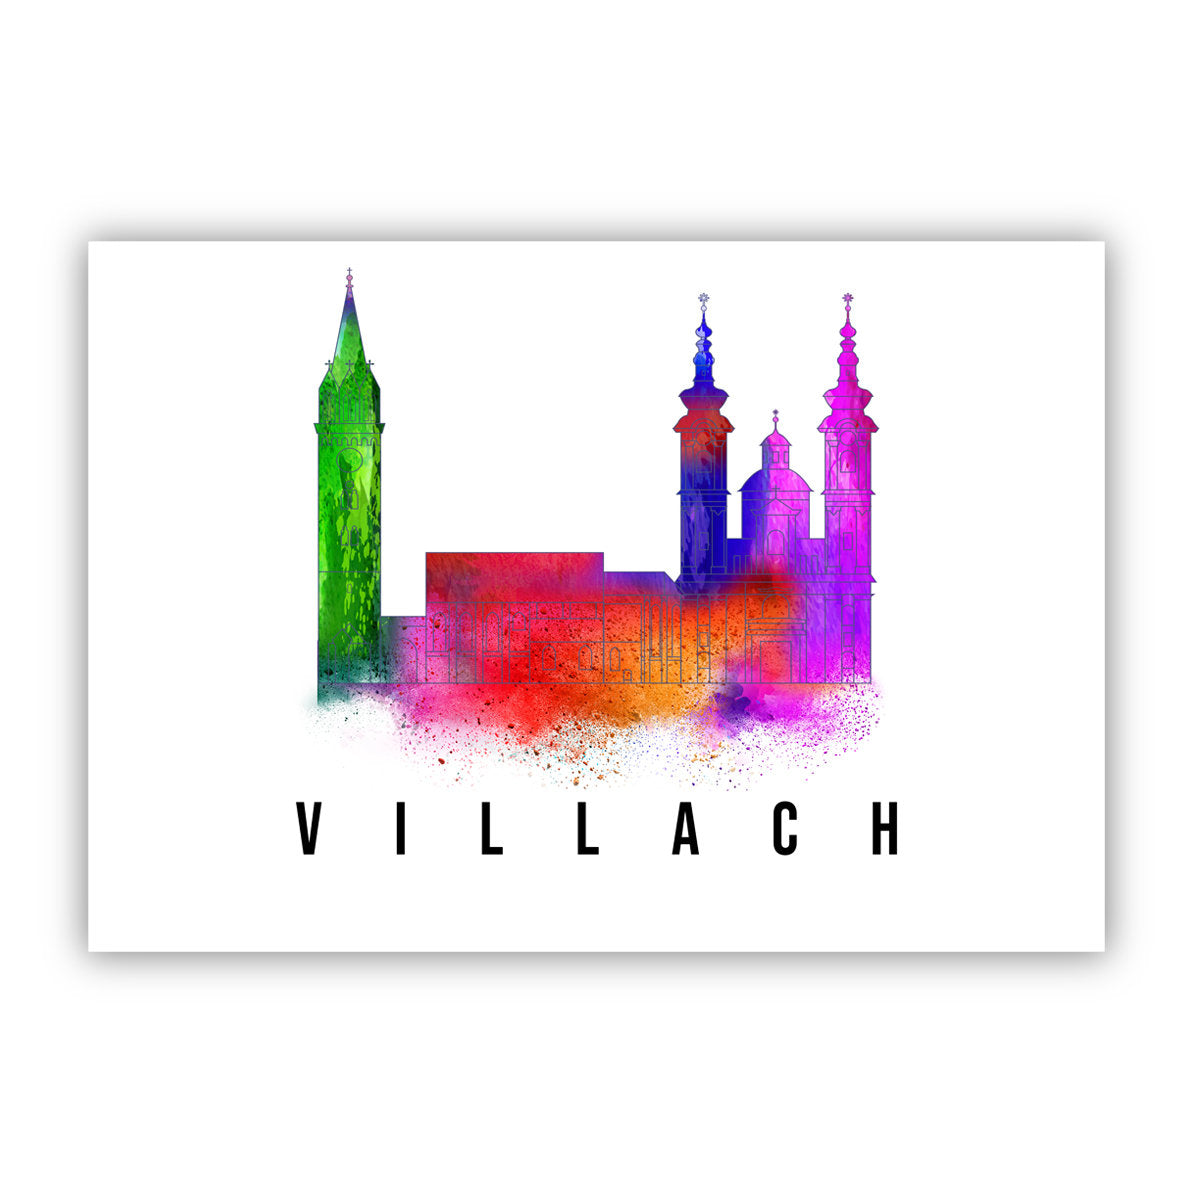 Pera Print Villach skyline poster, Villach Austria poster, Illustration skyline world city poster, Cityscape landmark print, Office wall art